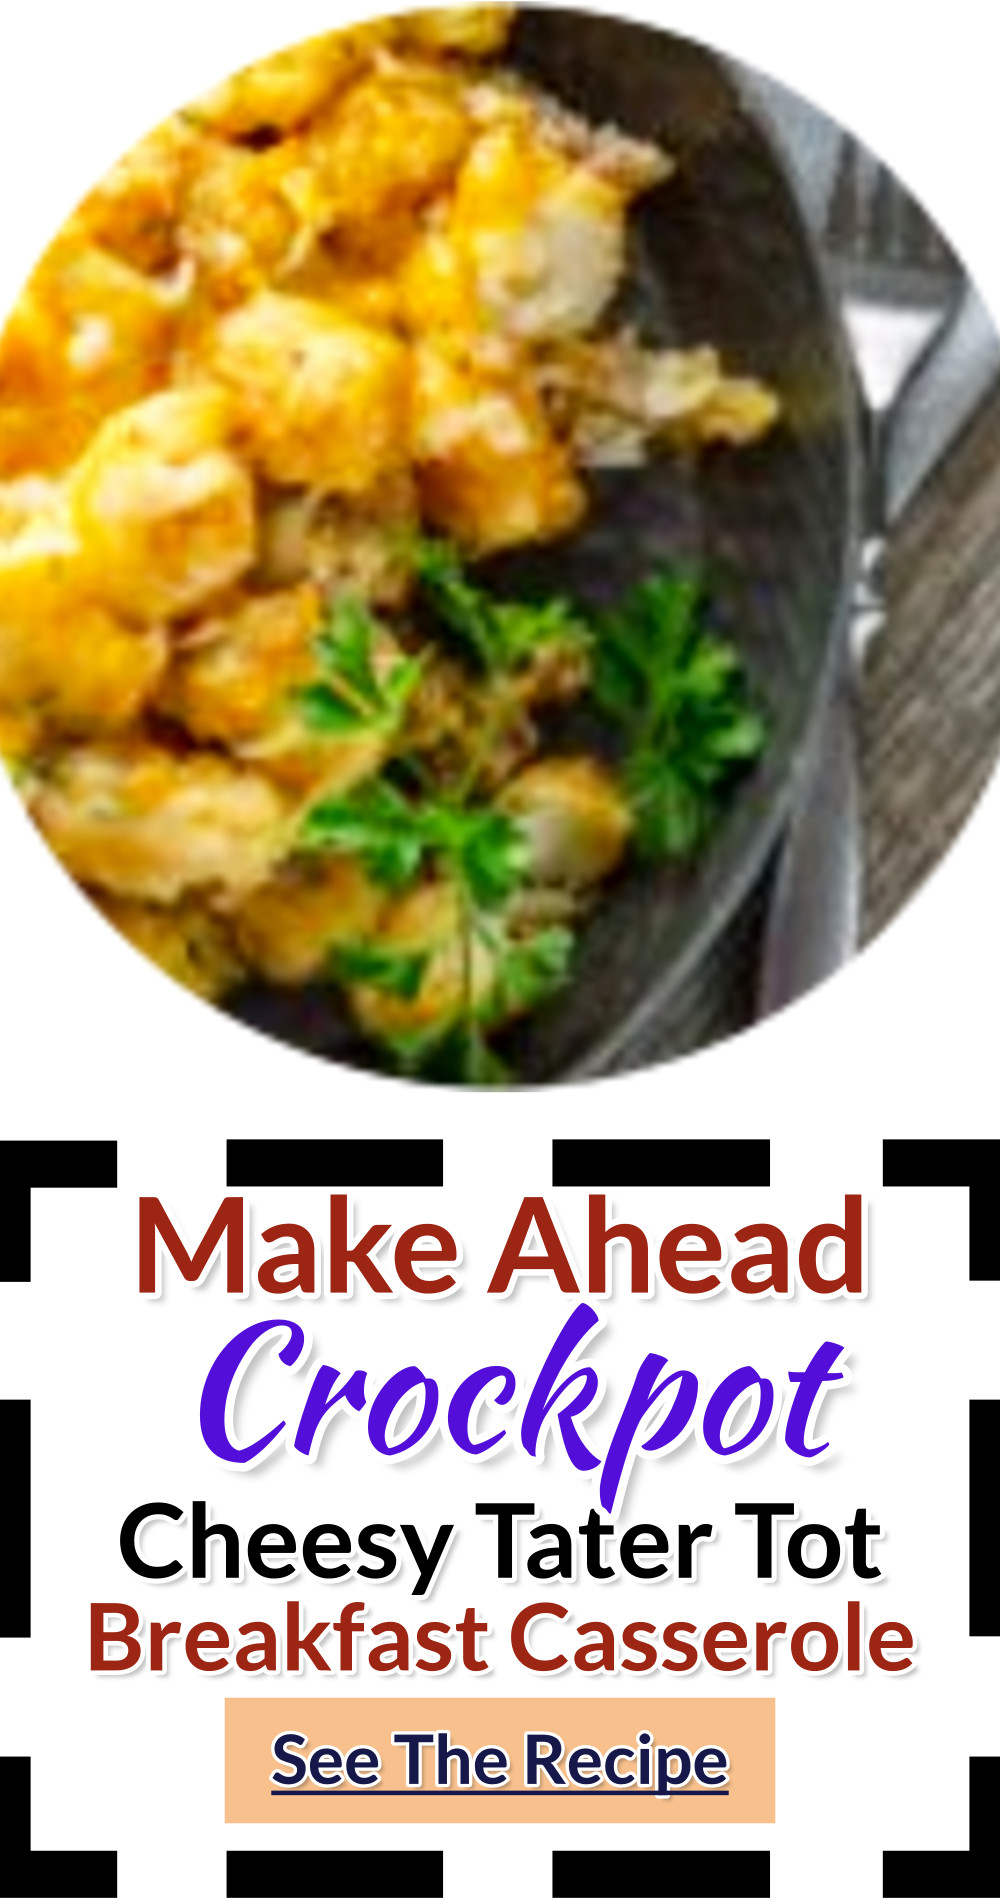 Make ahead crockpot cheesy tater tot breakfast casserole